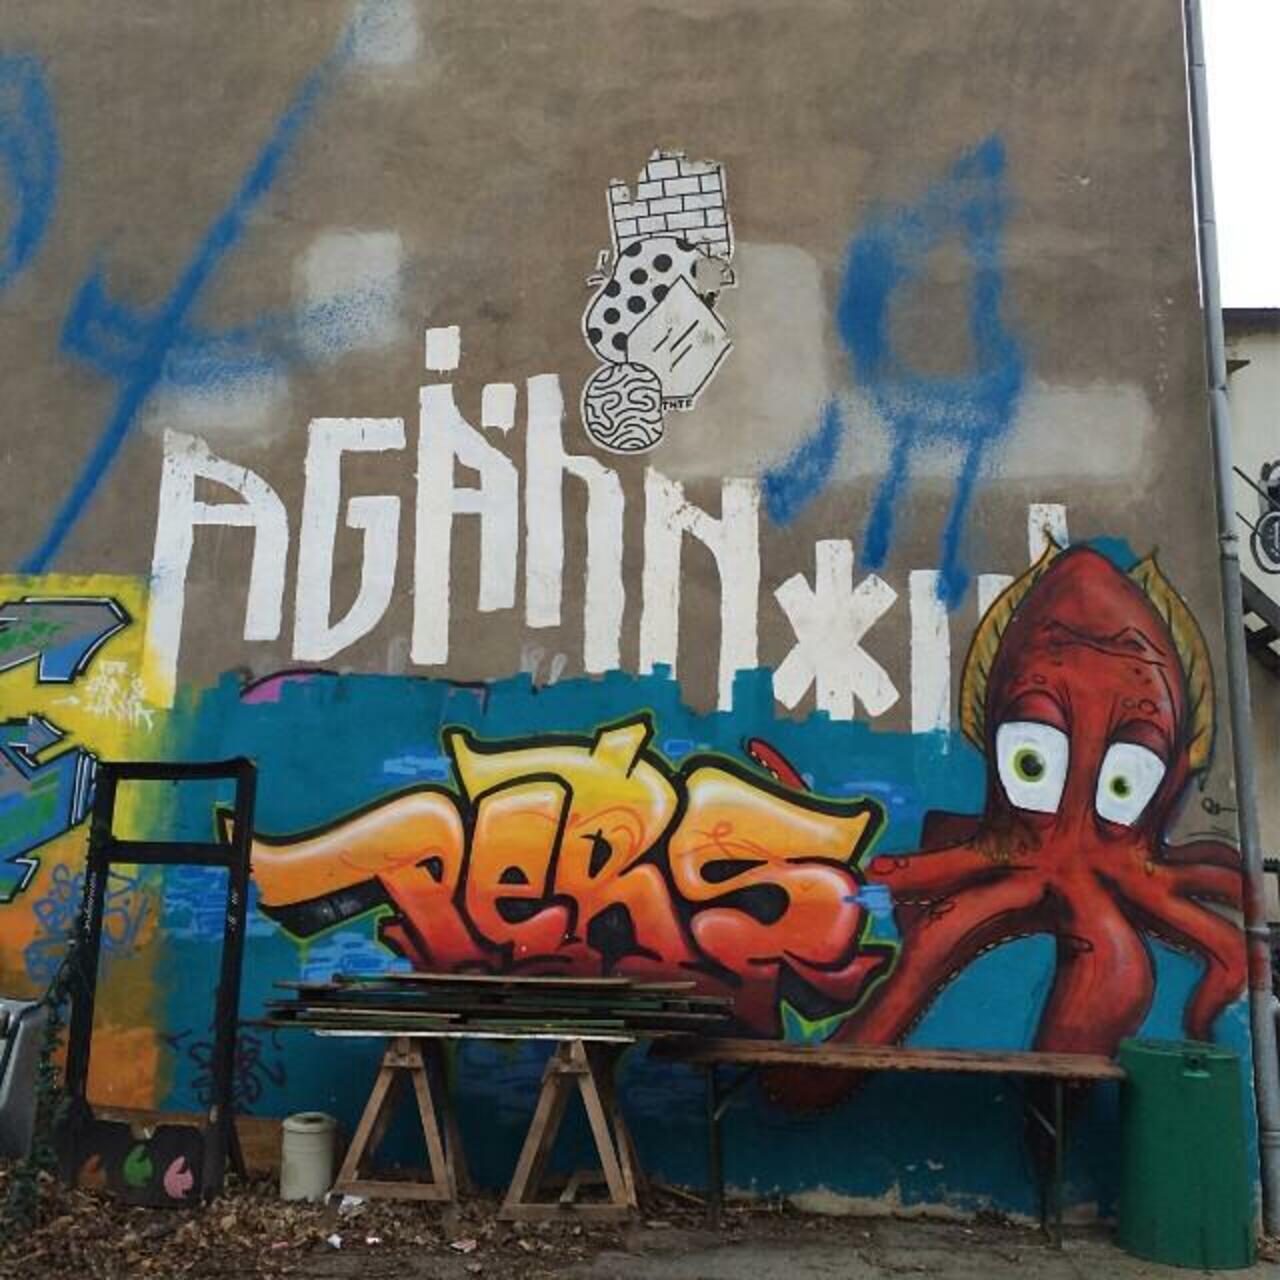 #Berlin #Allemagne #streetart #street #art #urbanart #urbantag #graffiti #streetartberlin by becombegeek http://t.co/46gqehDVV7